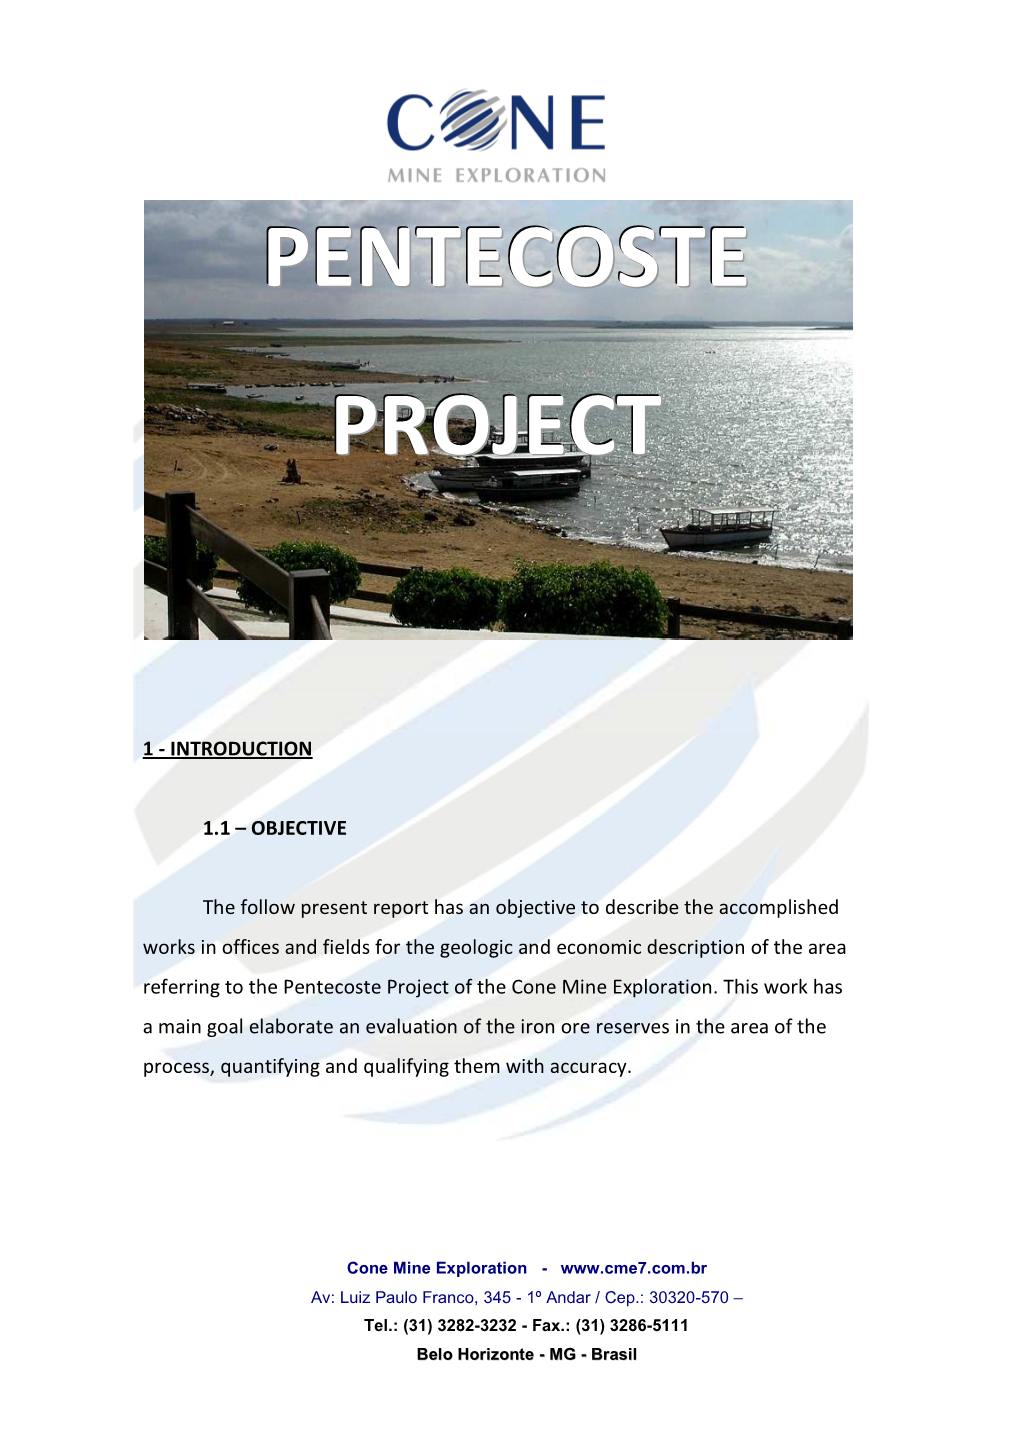 Pentecoste Project of the Cone Mine Exploration